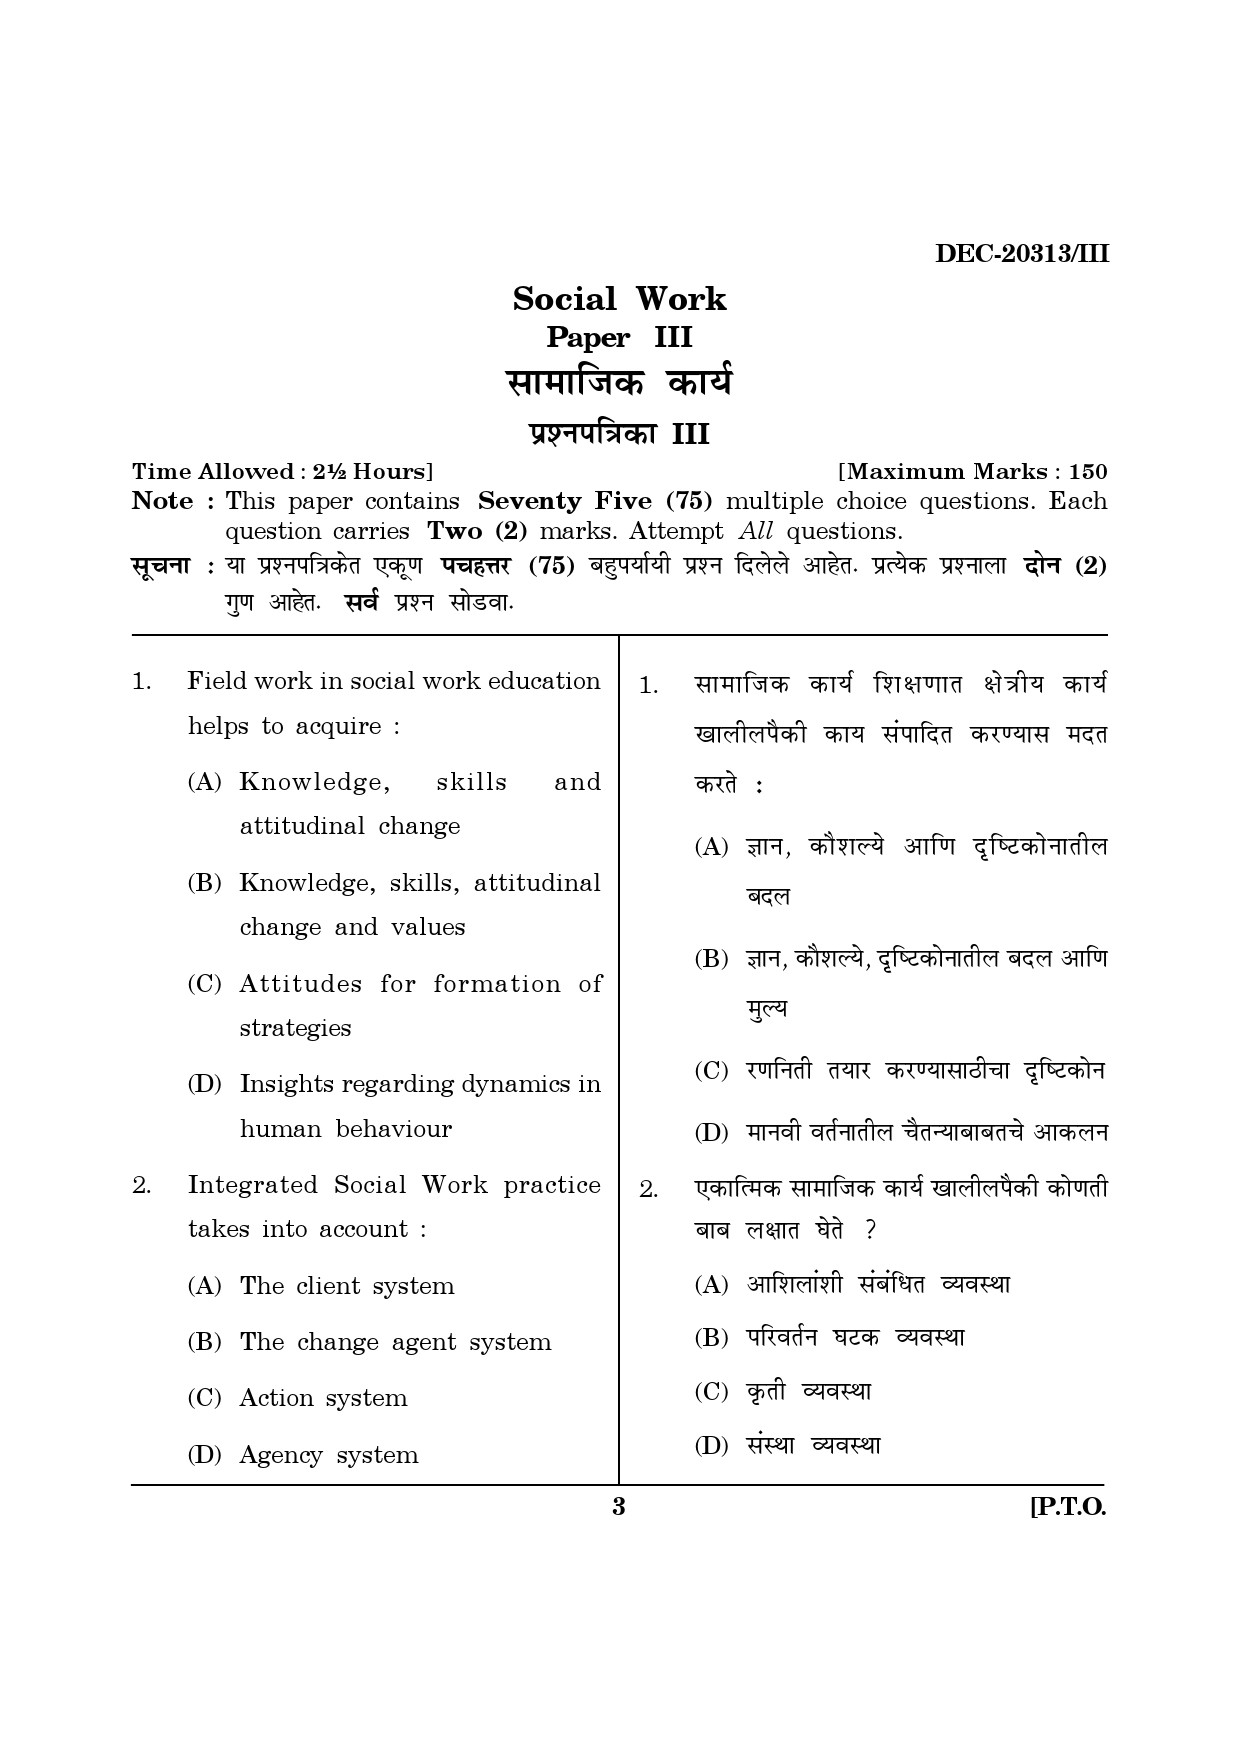 Maharashtra SET Social Work Question Paper III December 2013 2